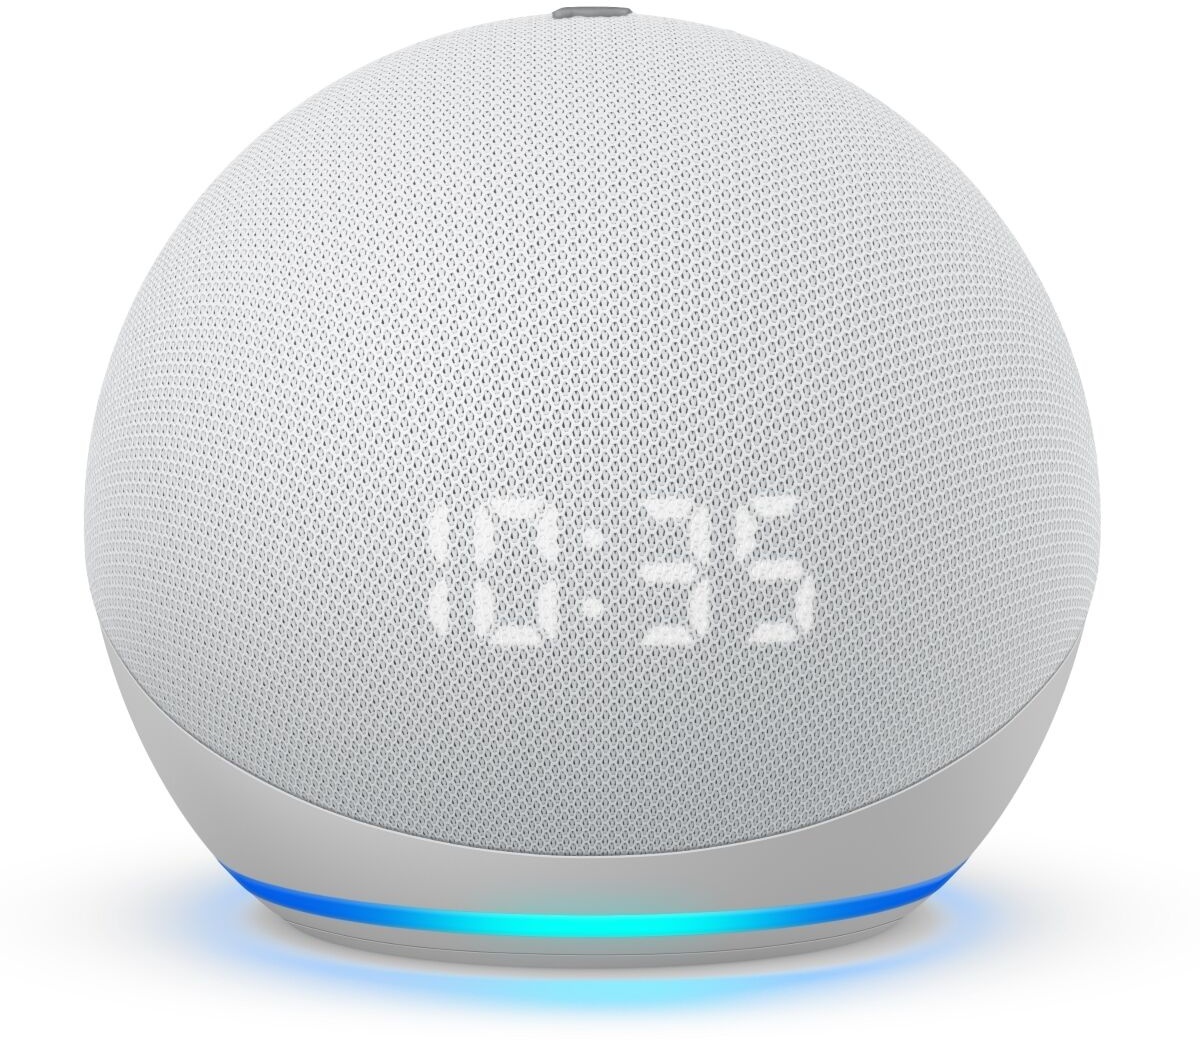 4. Generation UHR Amazon Echo Dot Sprachgesteuerter  Lautsprecher mit Alexa 